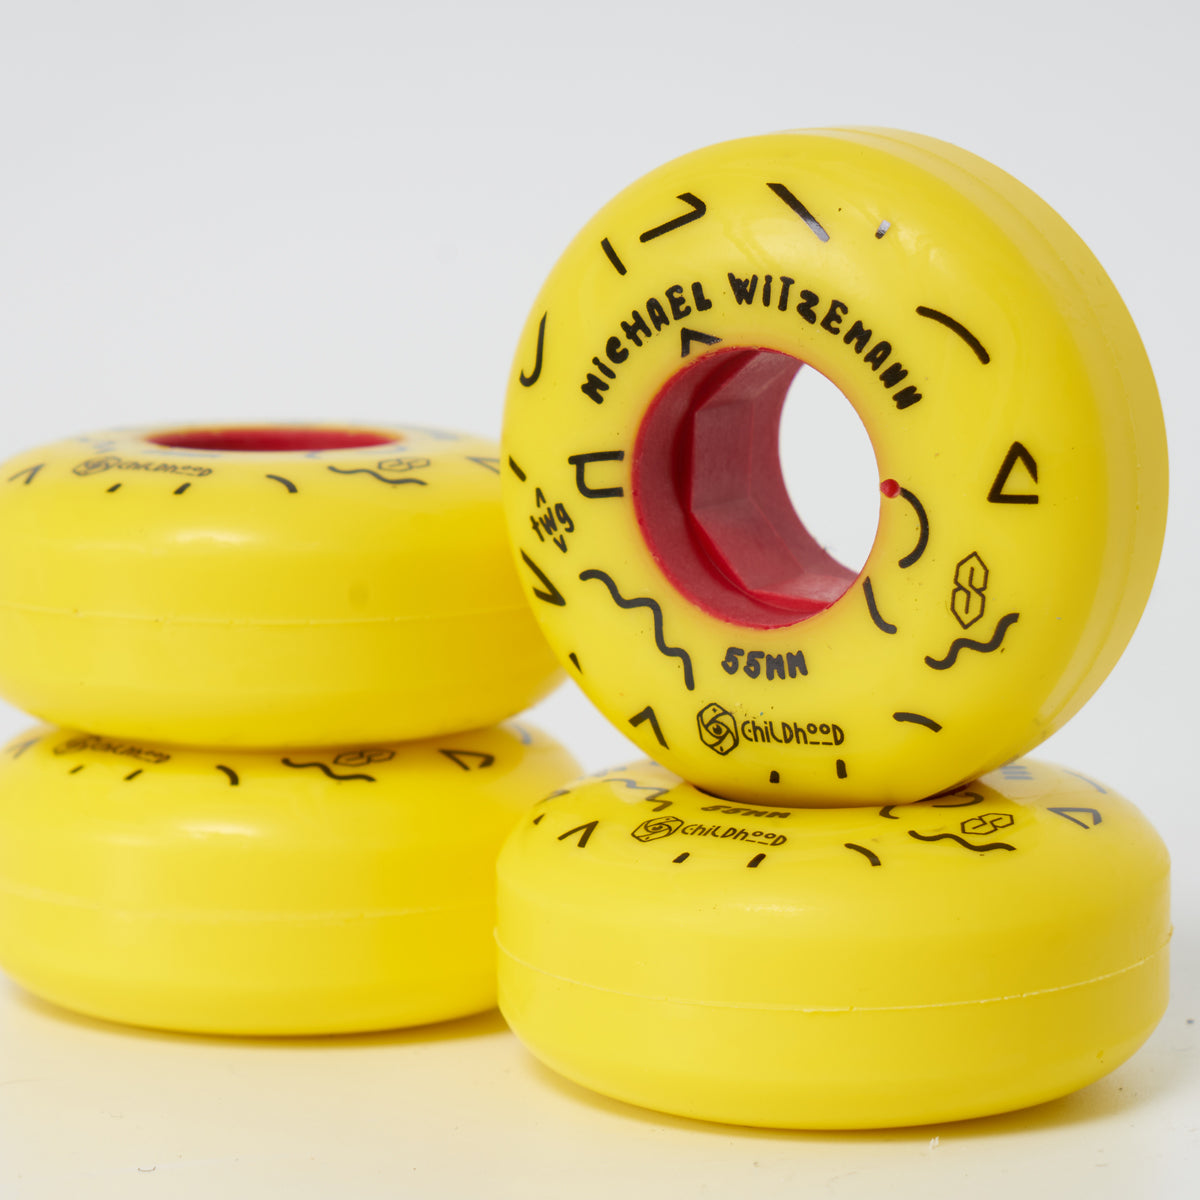 Red Eye Michael Witzemann 'Childhood' 55mm/90a Wheels - Yellow